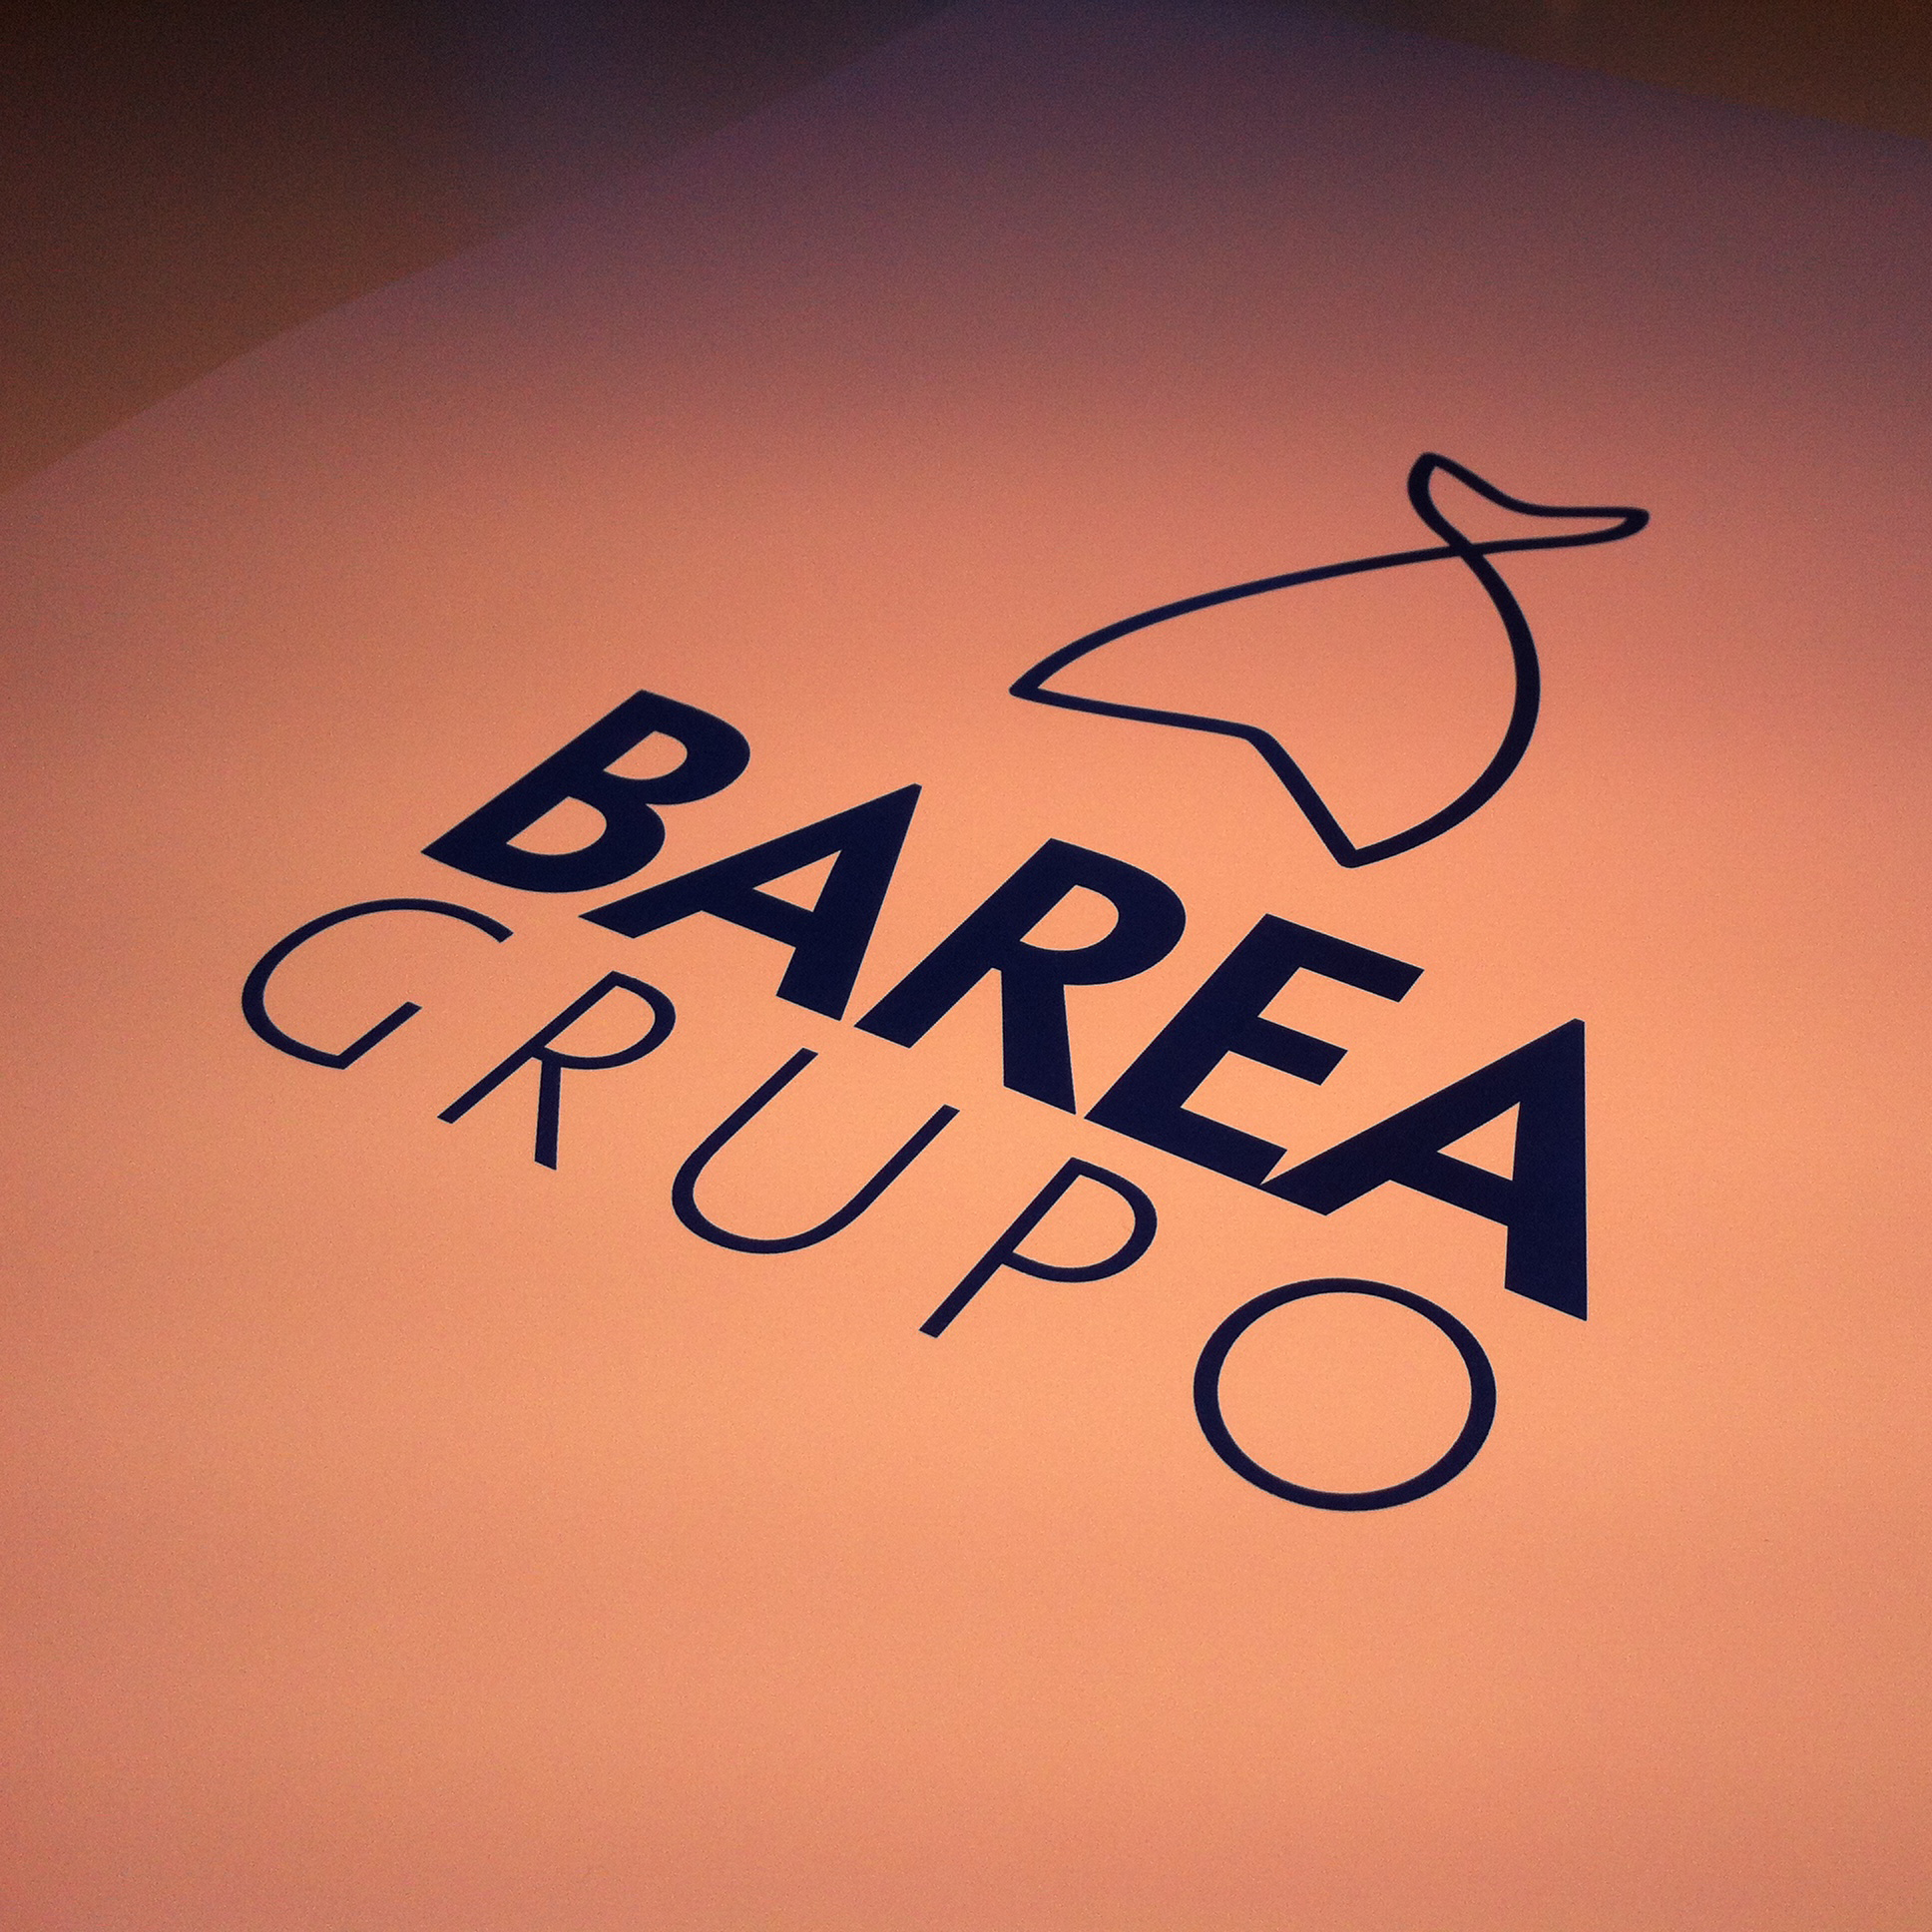 branding_marca_grupo_barea_textura_design